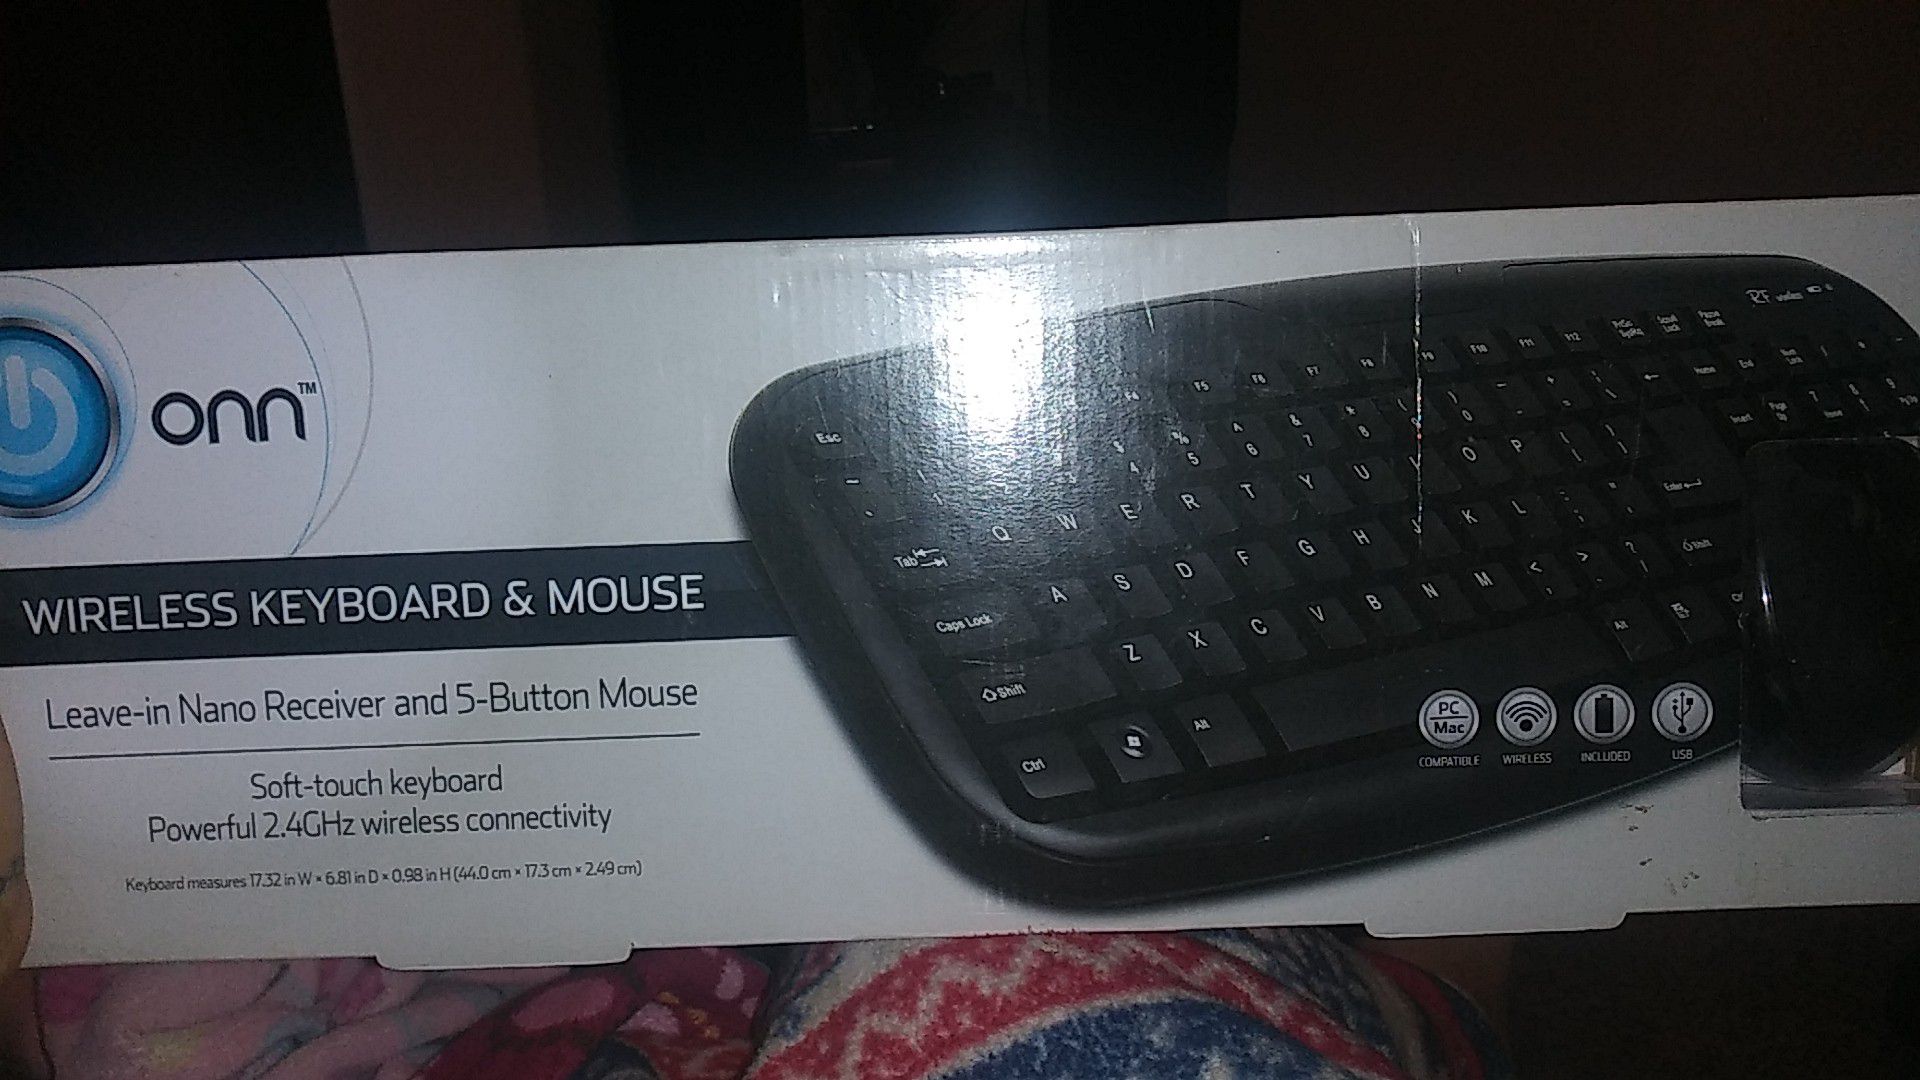 Wireless keyboard with wireless mouse